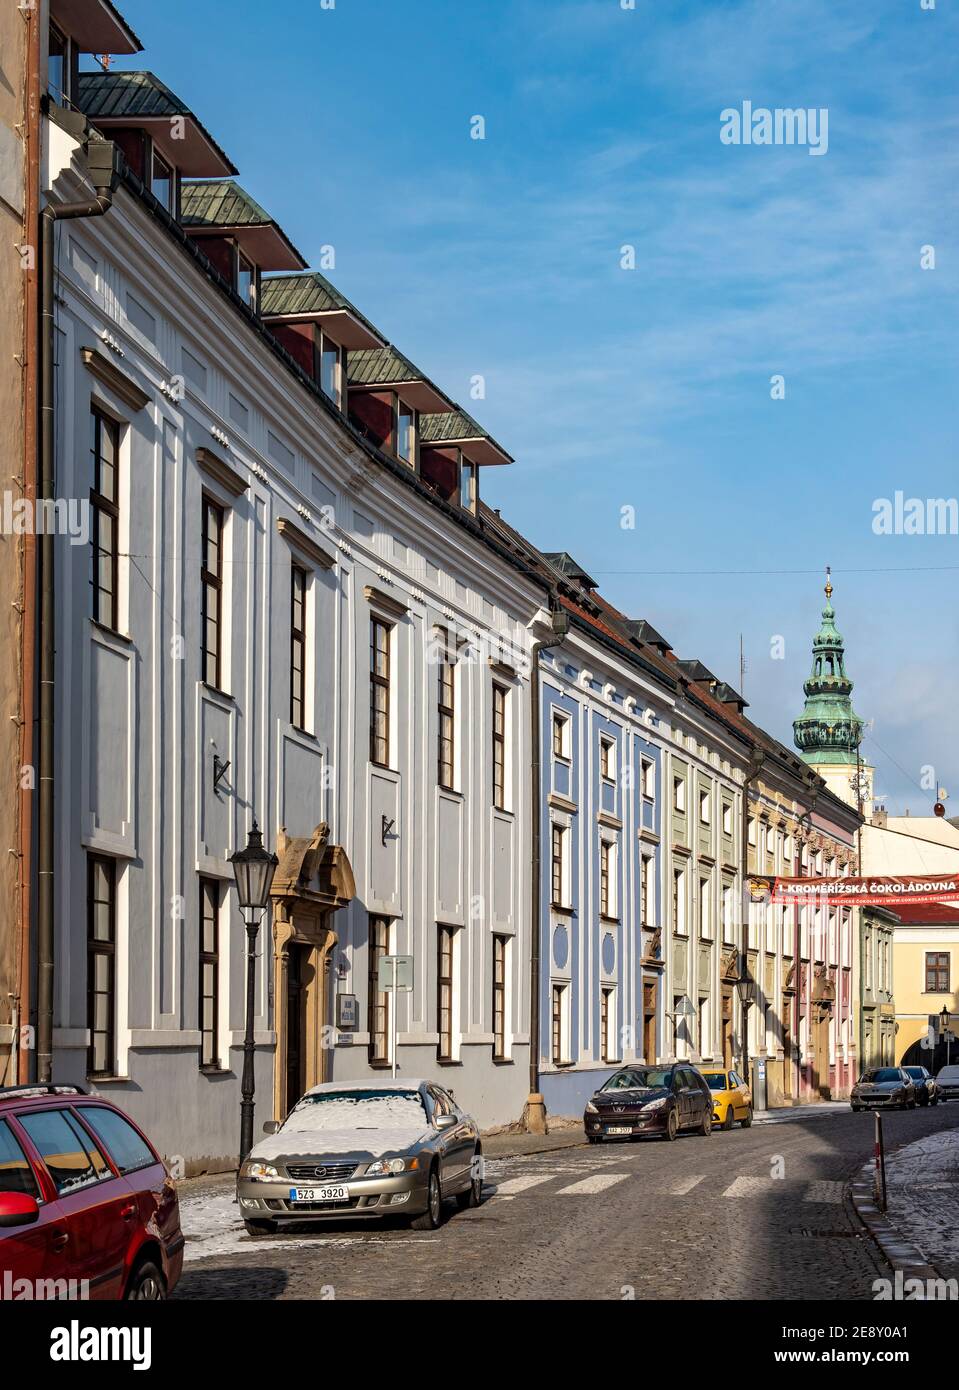 Scena stradale, Kroměříž (Kromeriz), Repubblica Ceca Foto Stock